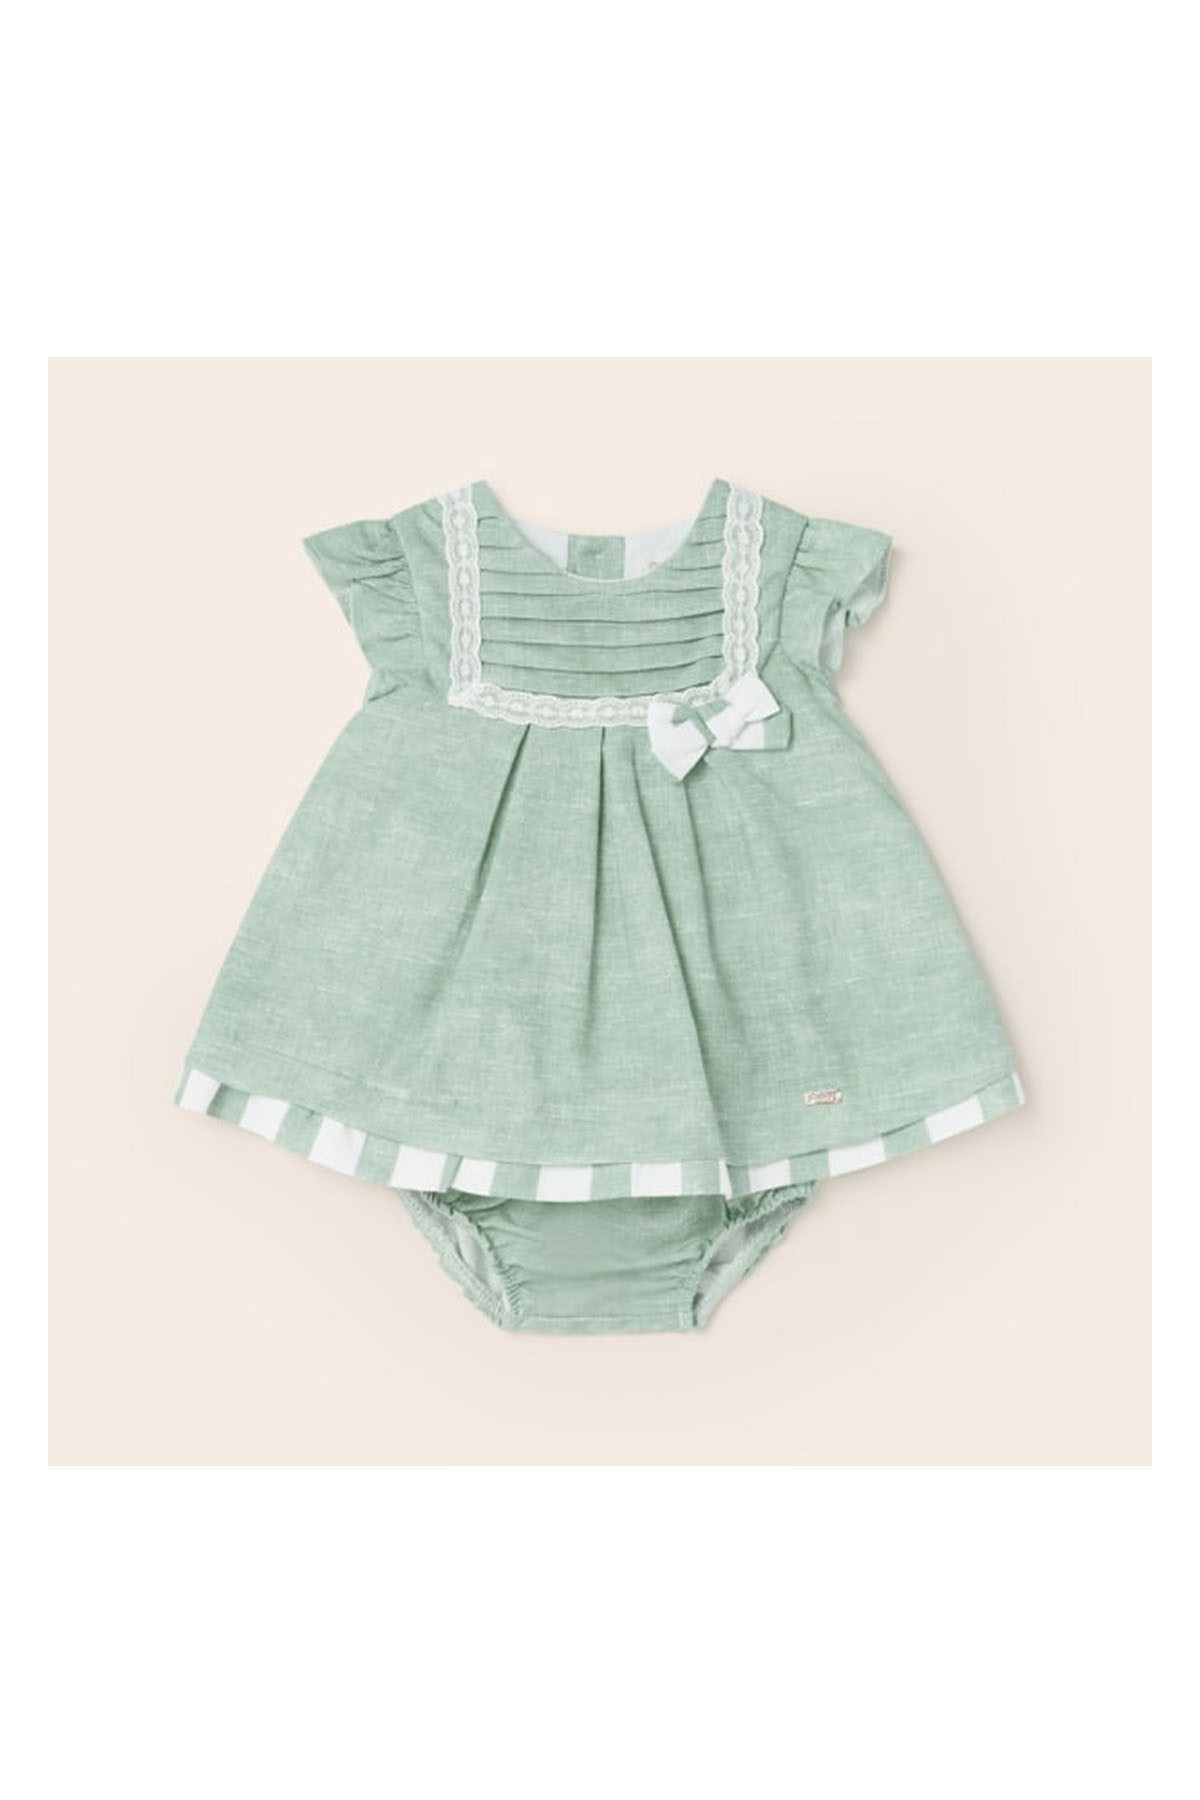 Mayoral Bebek Elbise Keten Kurdeleli Yeşil